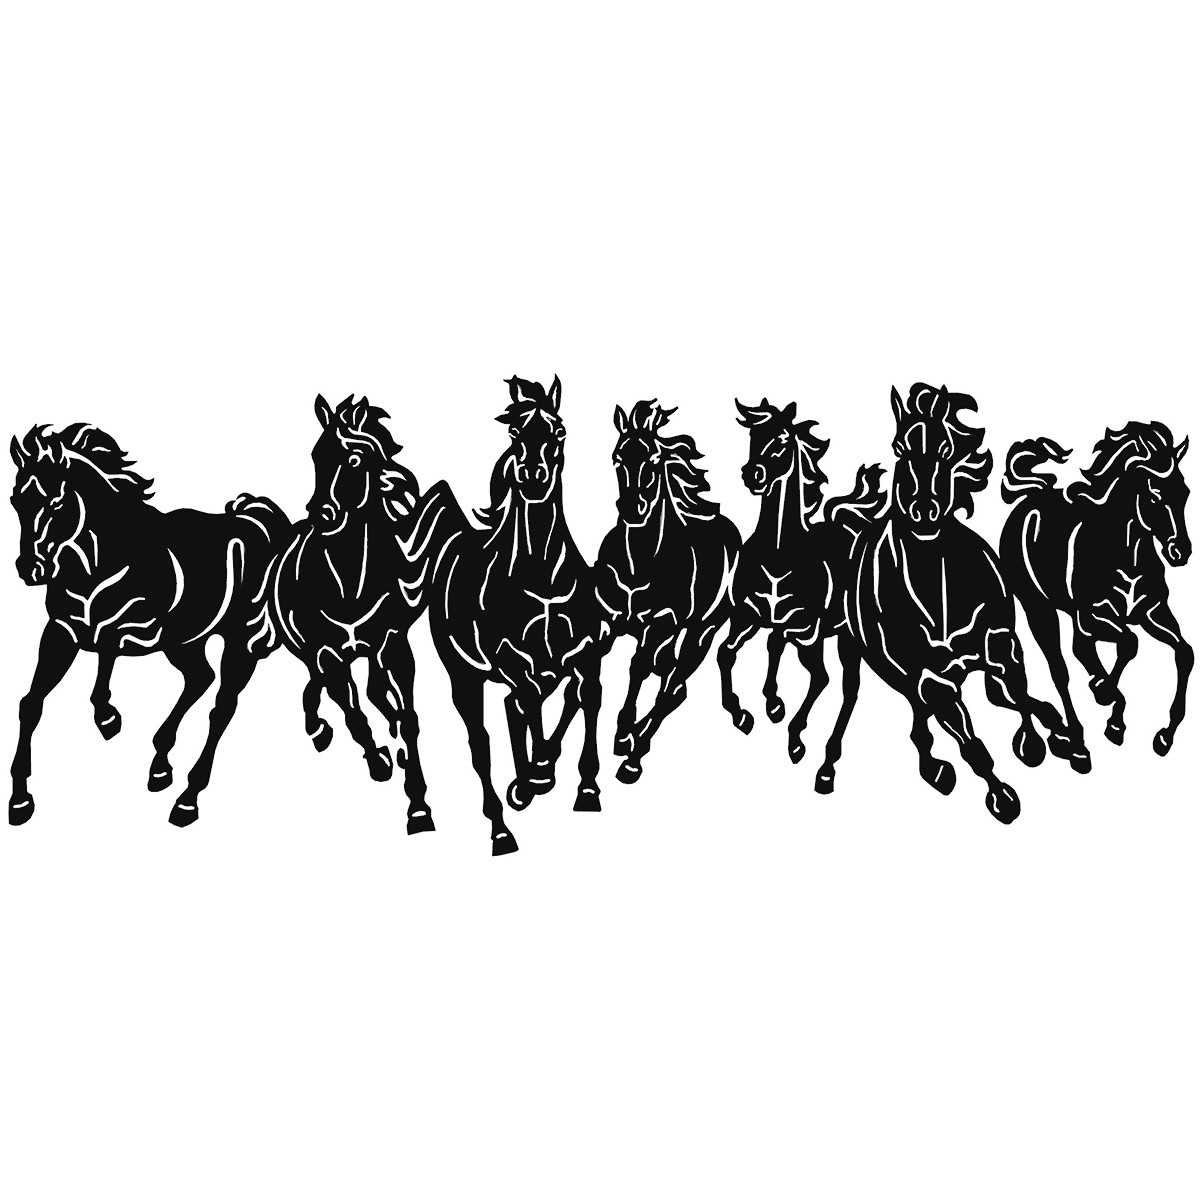  Metal Wall Art Racing Horses Design